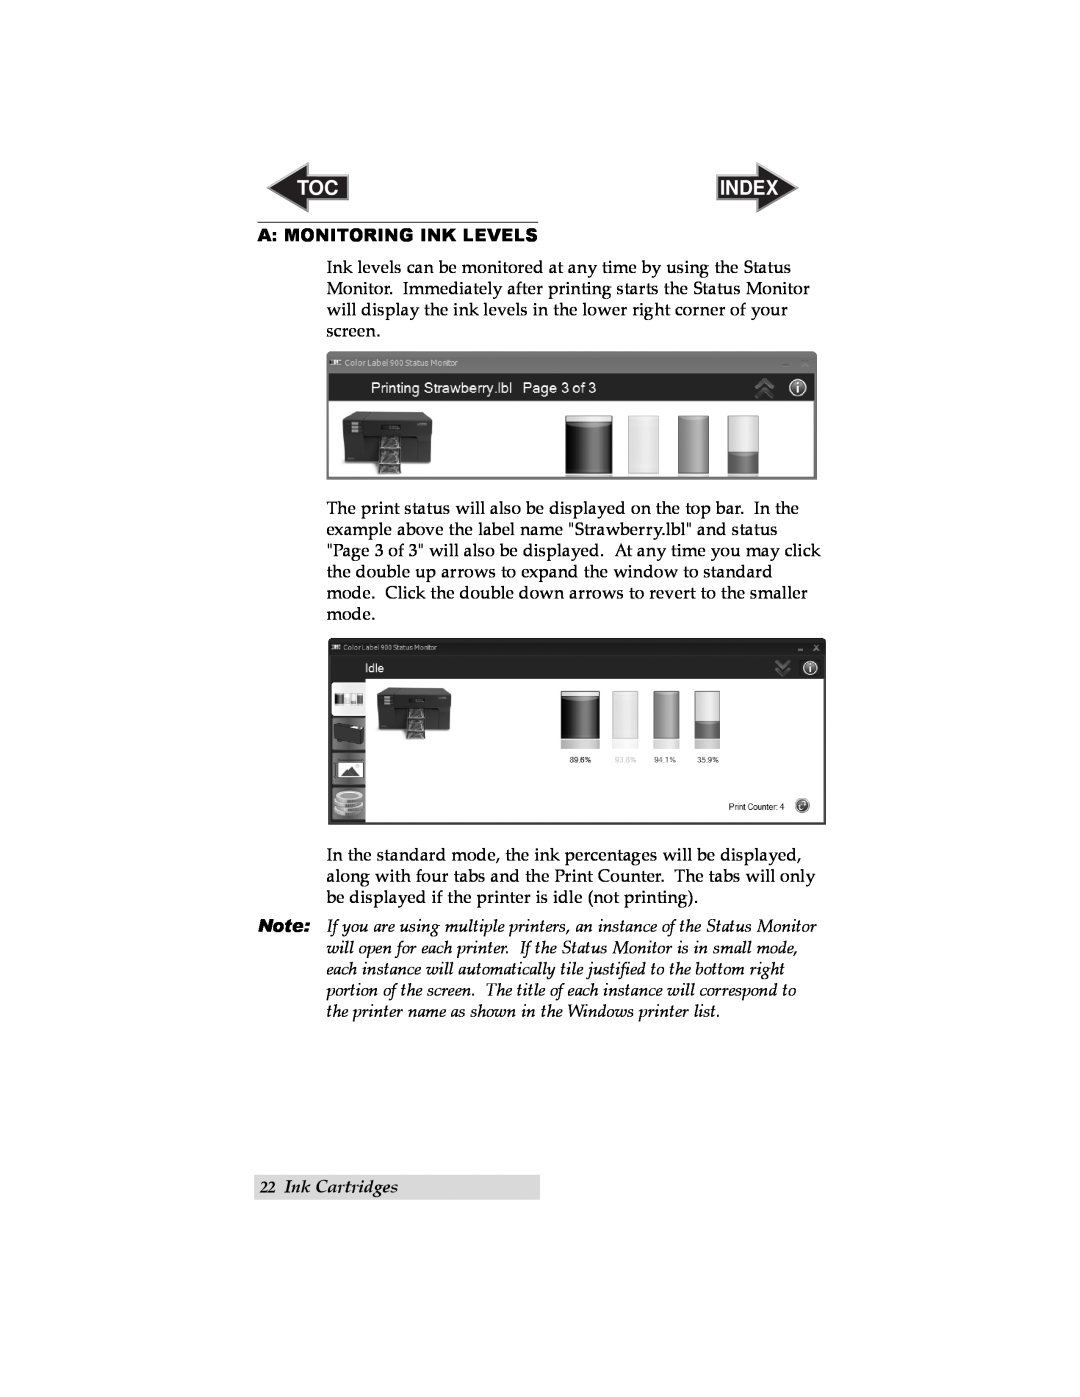 Primera Technology RX900 user manual A Monitoring Ink Levels, Ink Cartridges, Index 